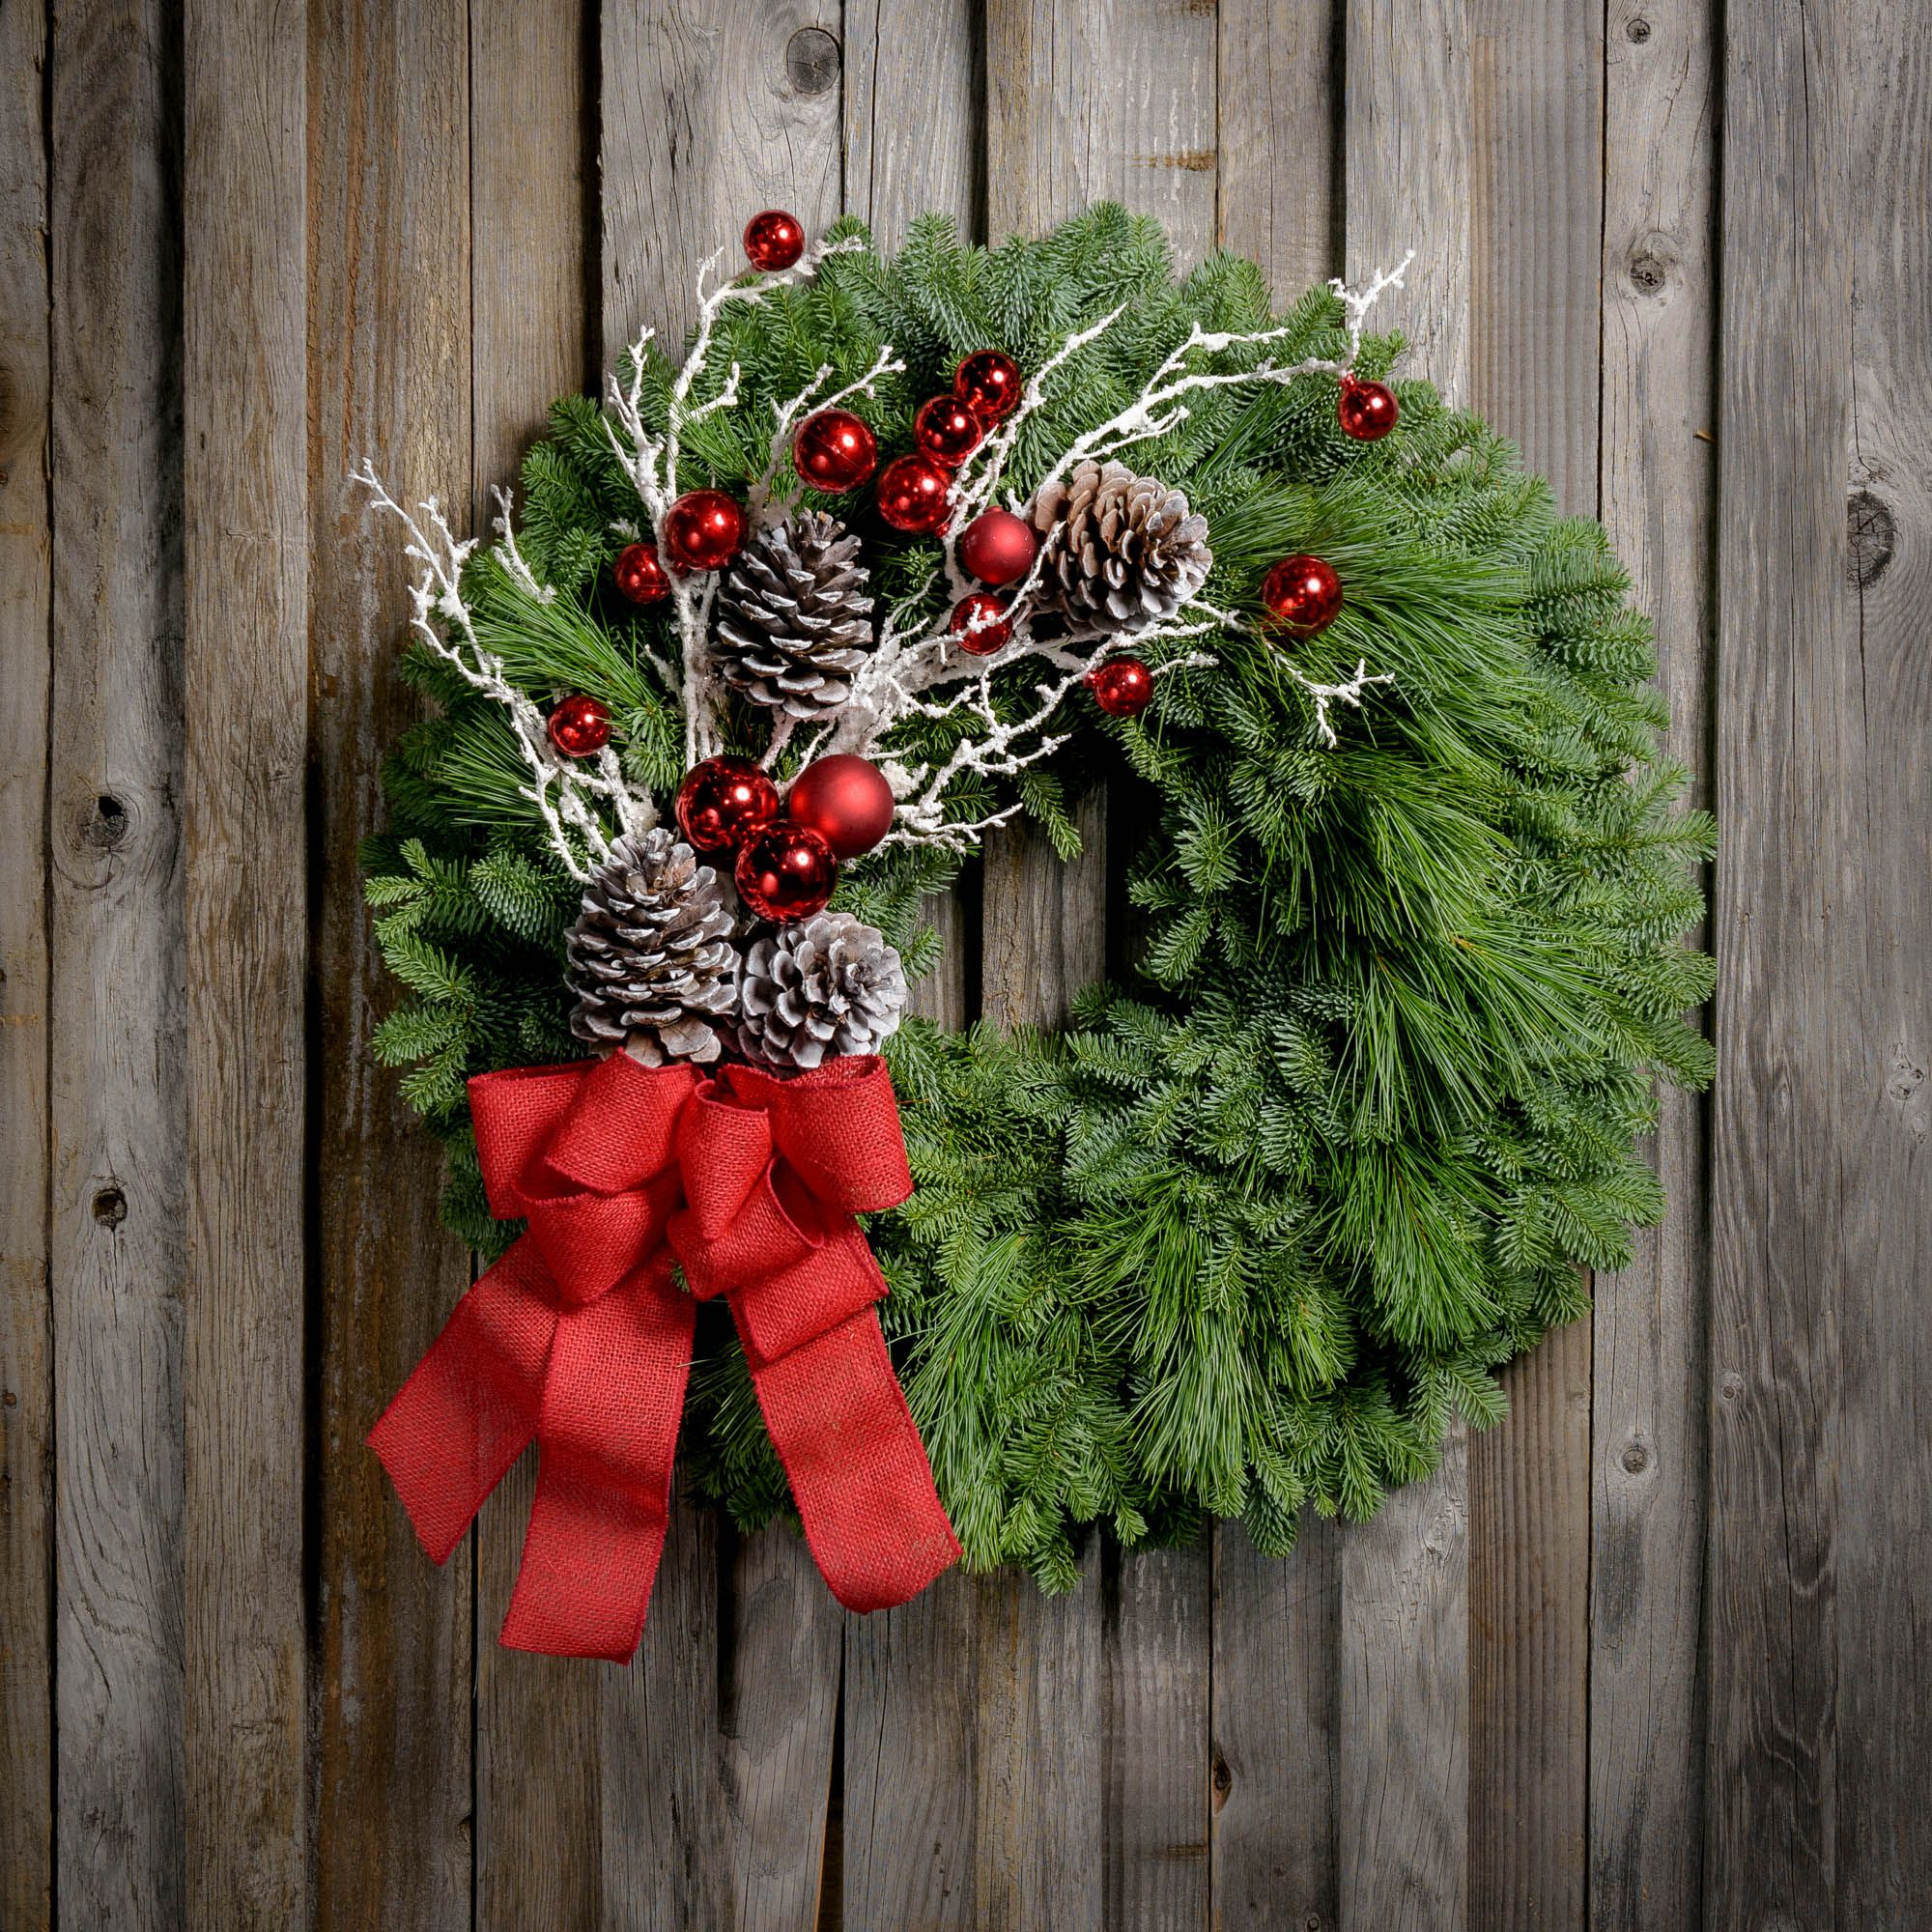 46 DIY Christmas Wreaths - How to Make a Holiday Wreath